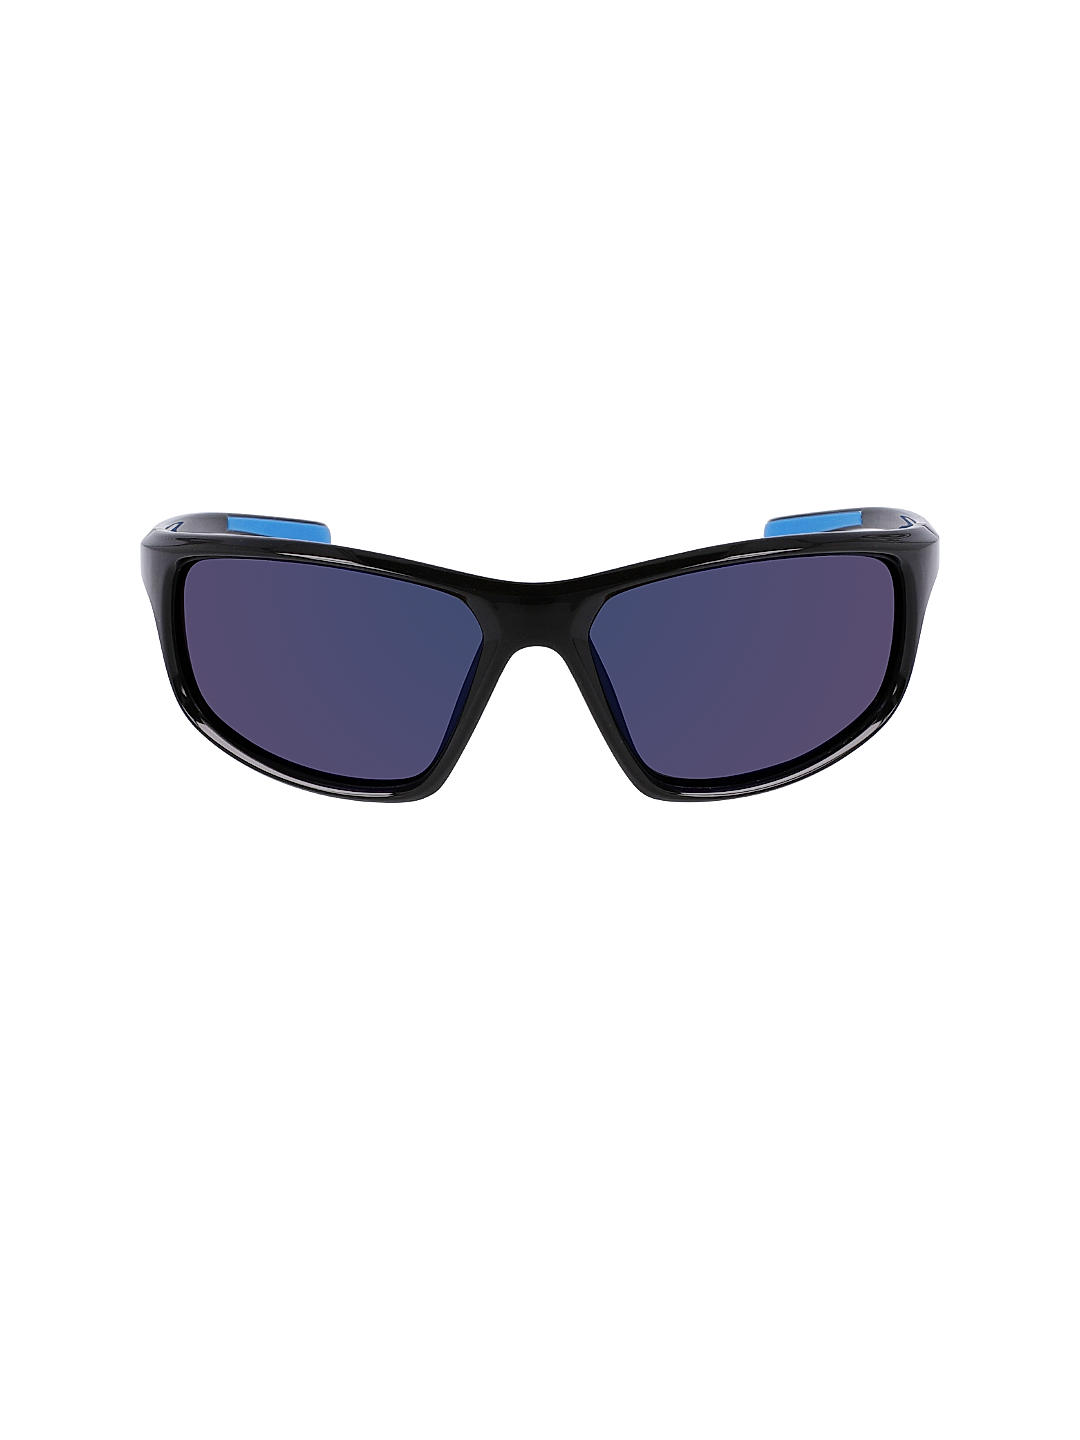 Columbia Bristol Mills Sunglasses - O/S - Black